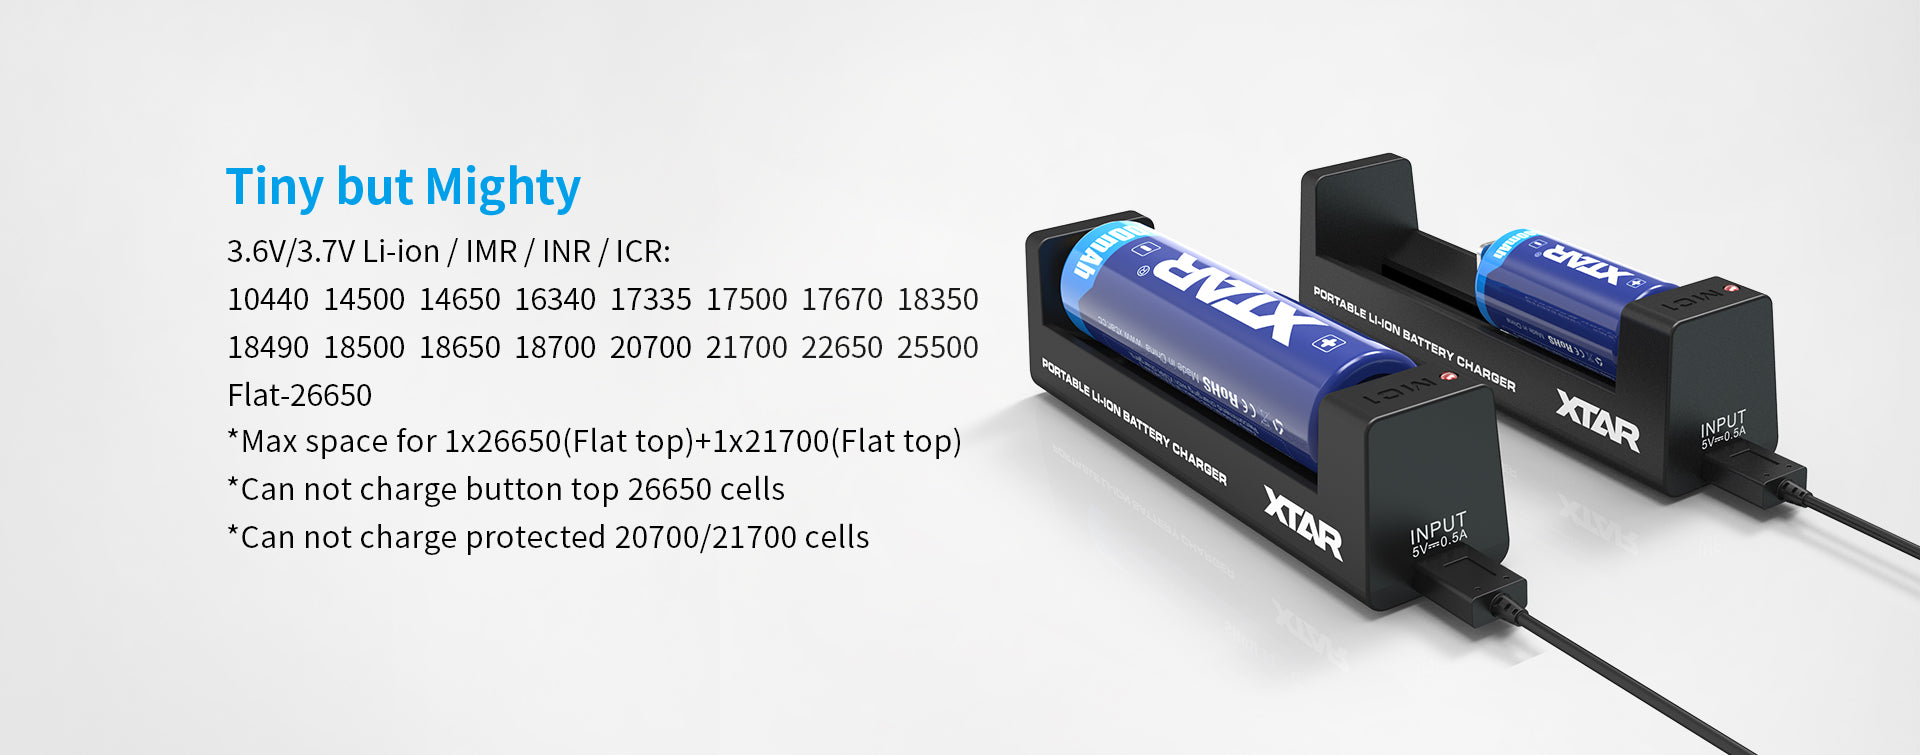 XTAR MC1 Single Bay Lithium-Ion Battery Charger